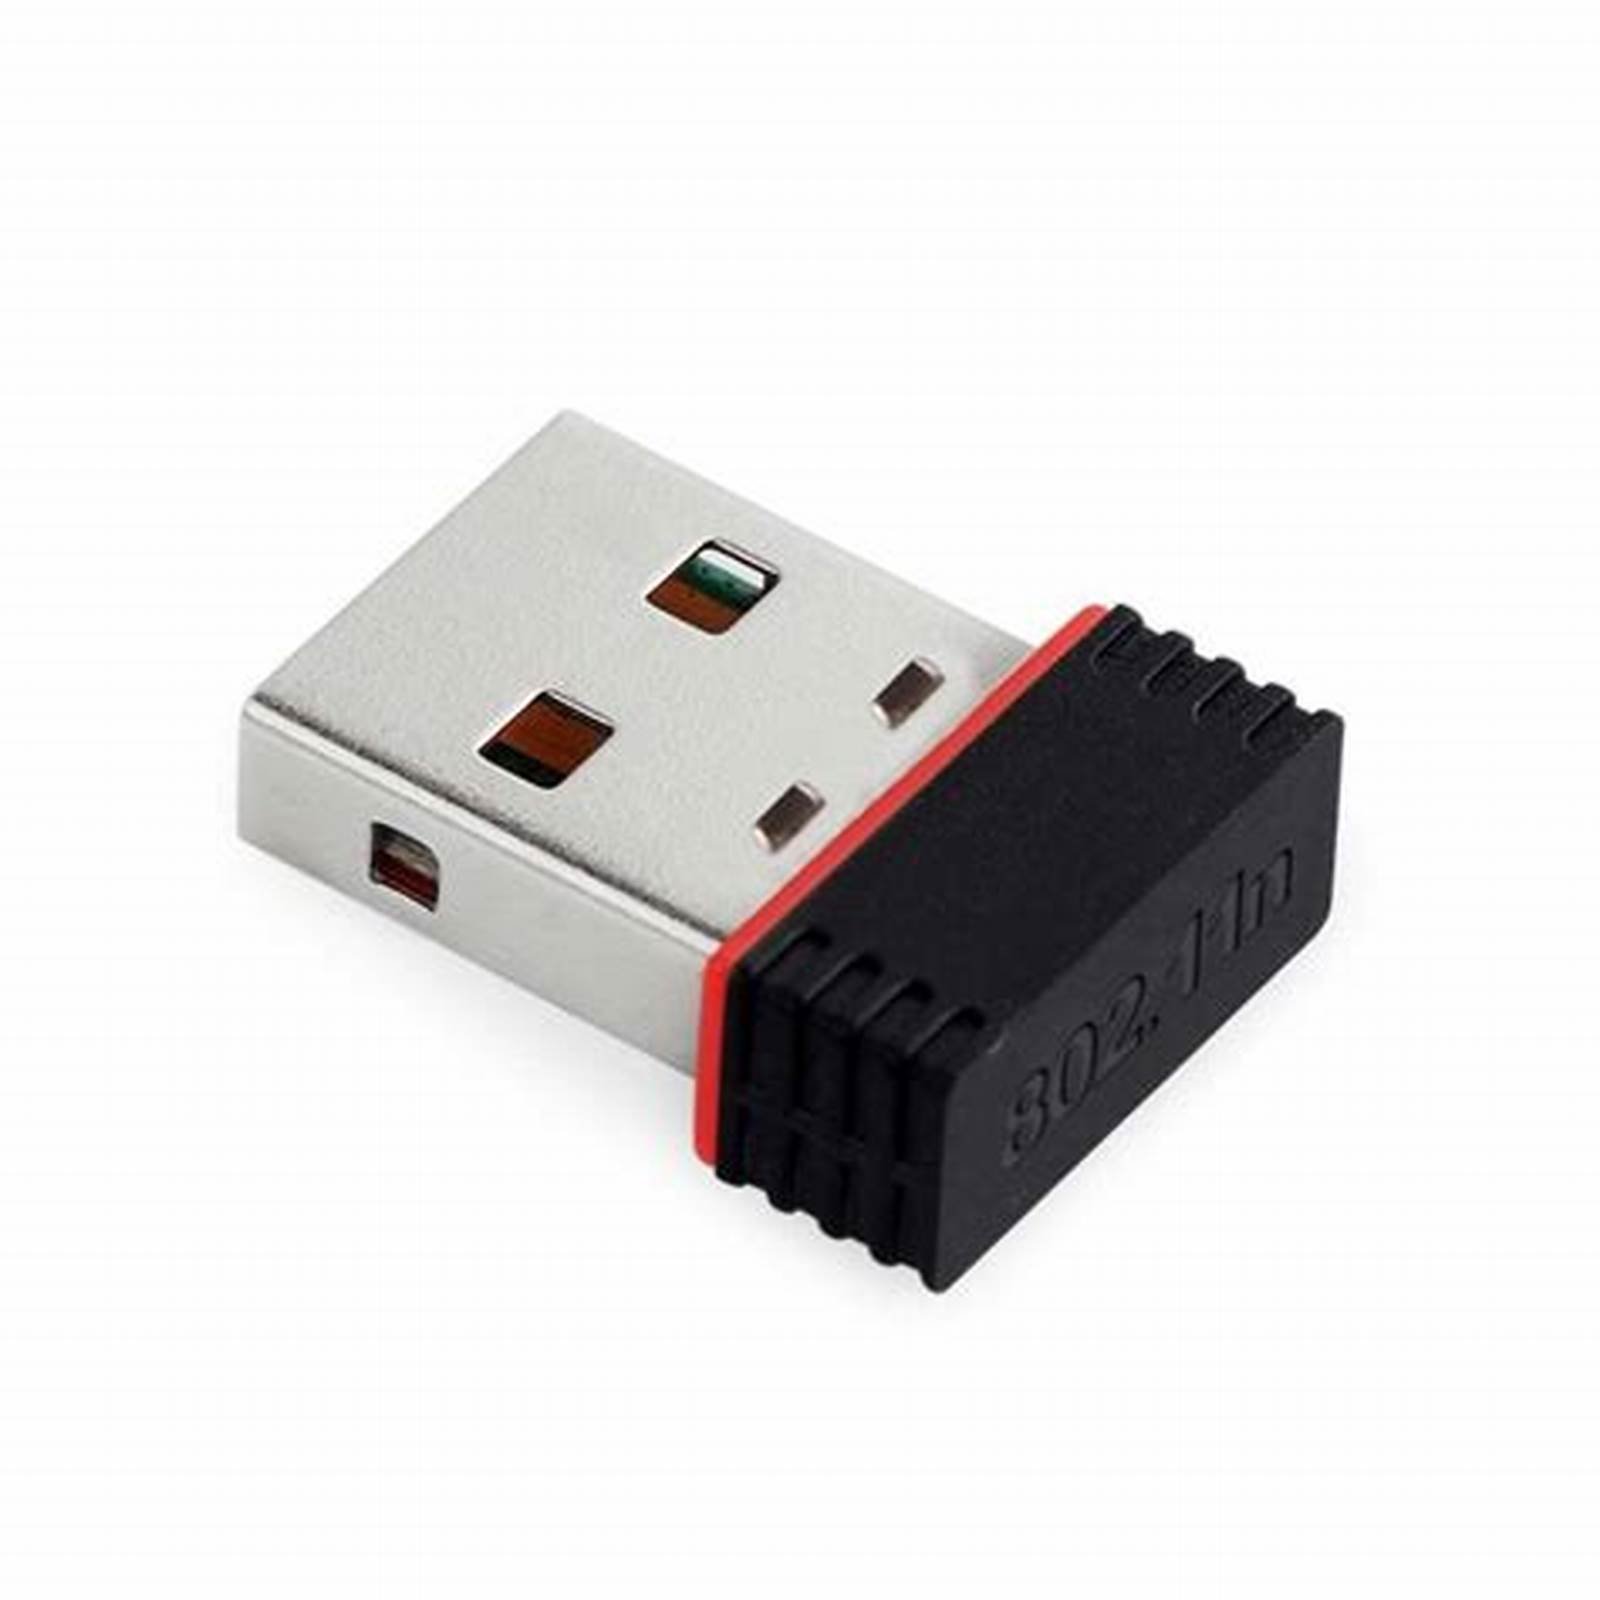 Dongle / adaptador WIFI Nano USB